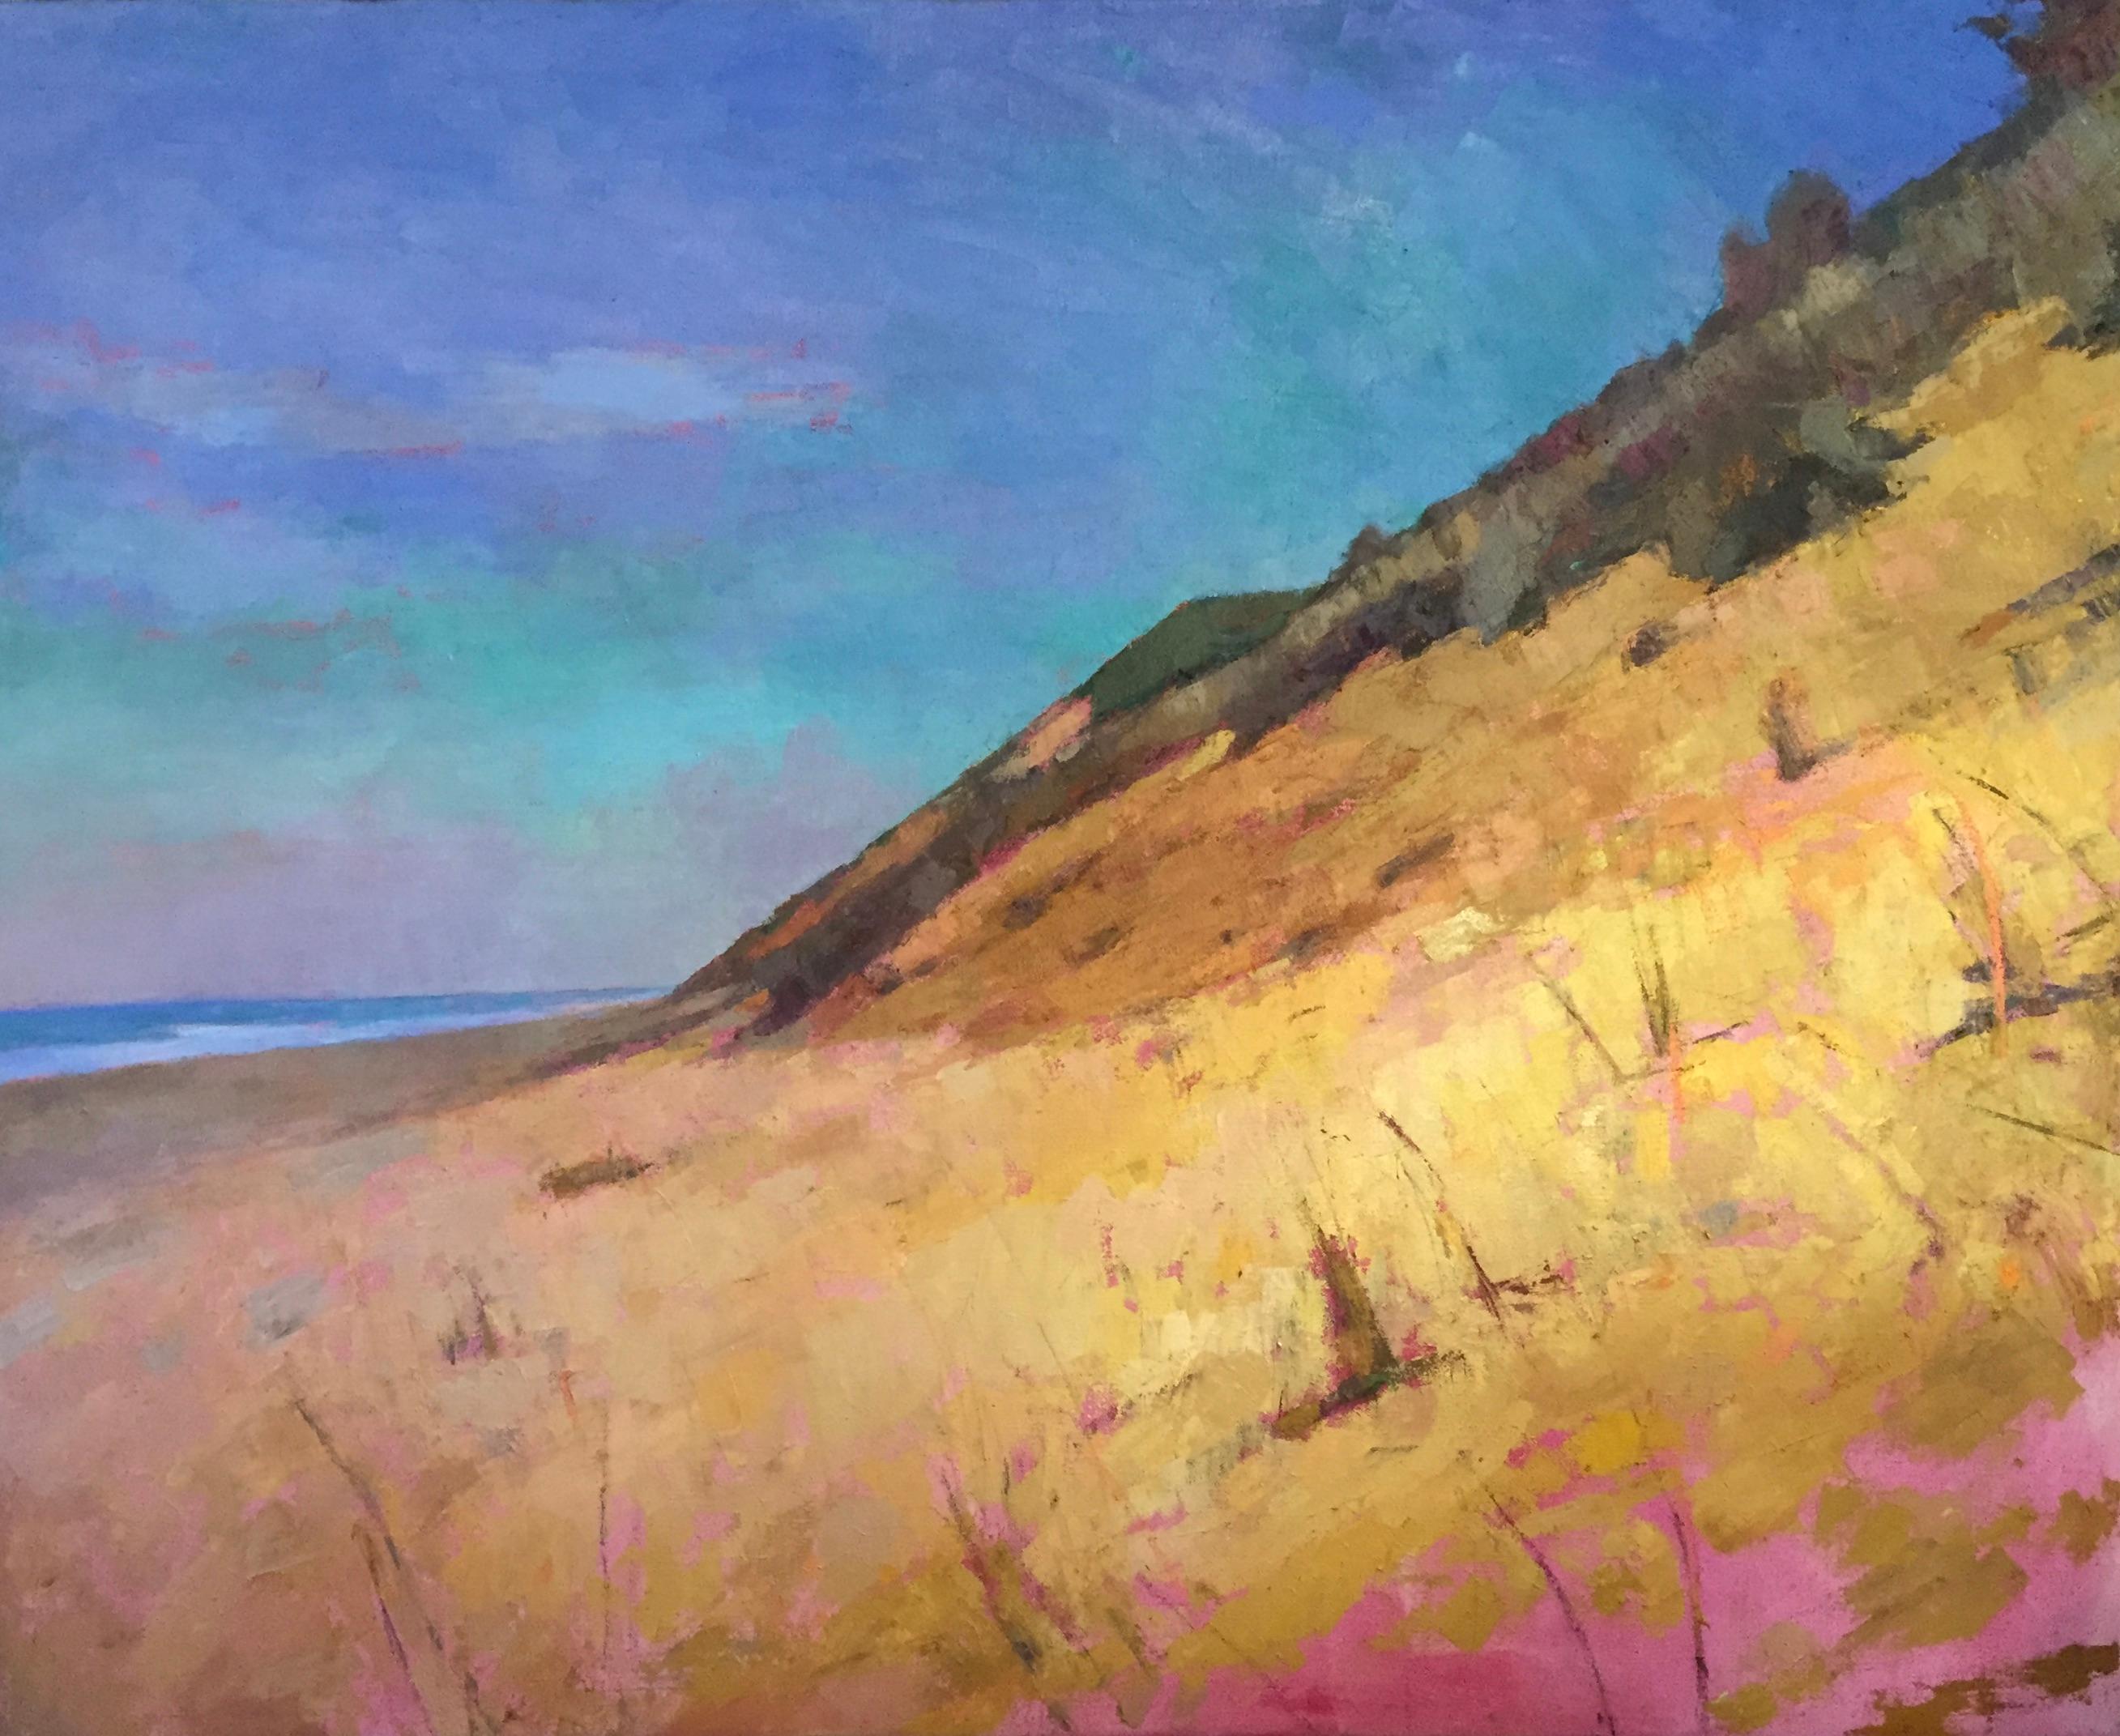 Larry Horowitz Landscape Painting - "Outer Cape" Oil landscape portrait of a yellow and green shoreline. 